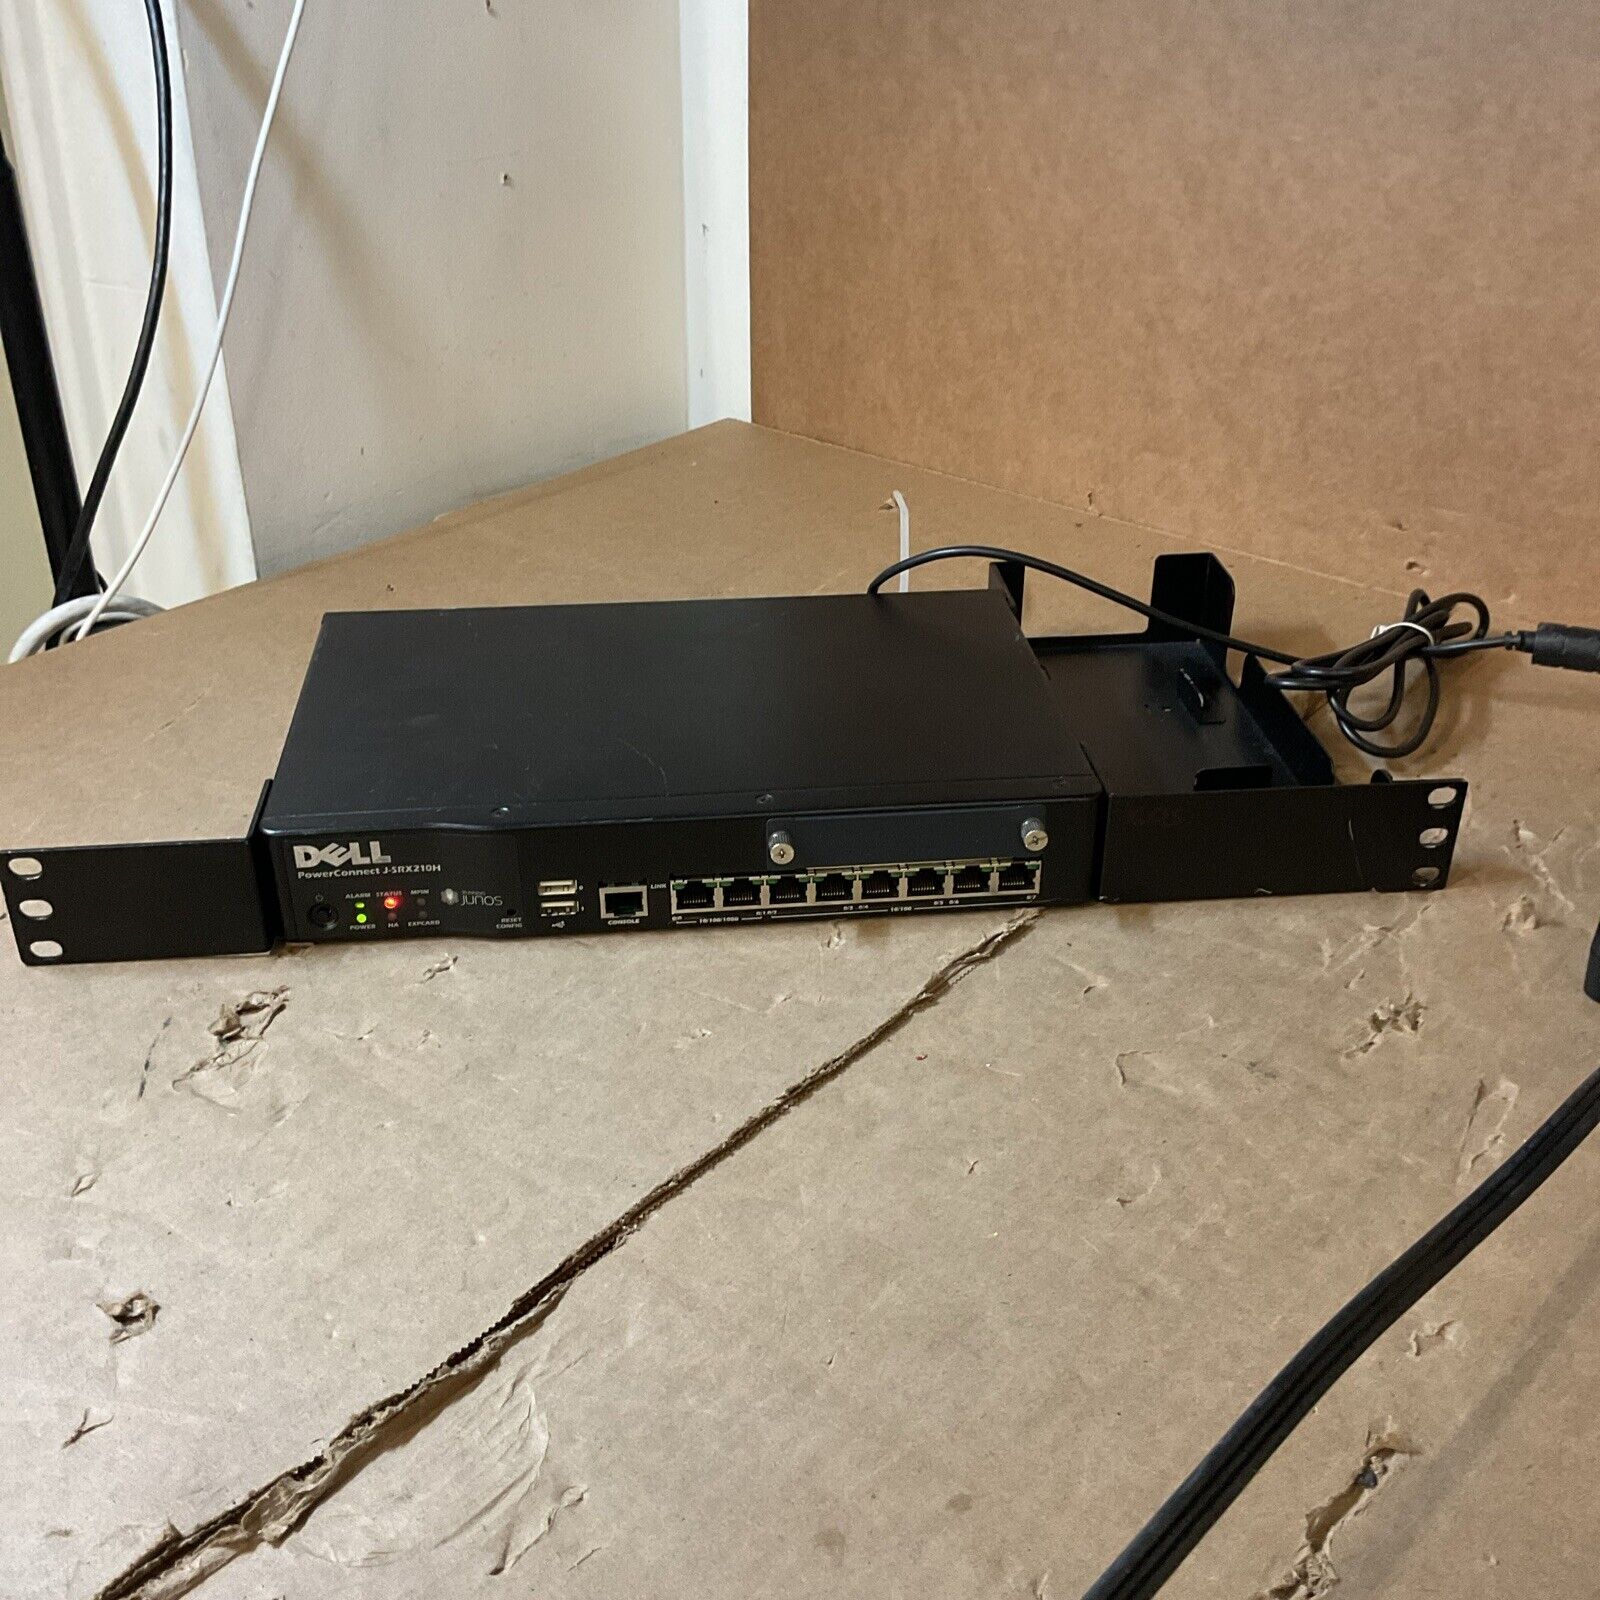 Dell Juniper PowerConnect J-SRX 210H Services Gateway Firewall Switch